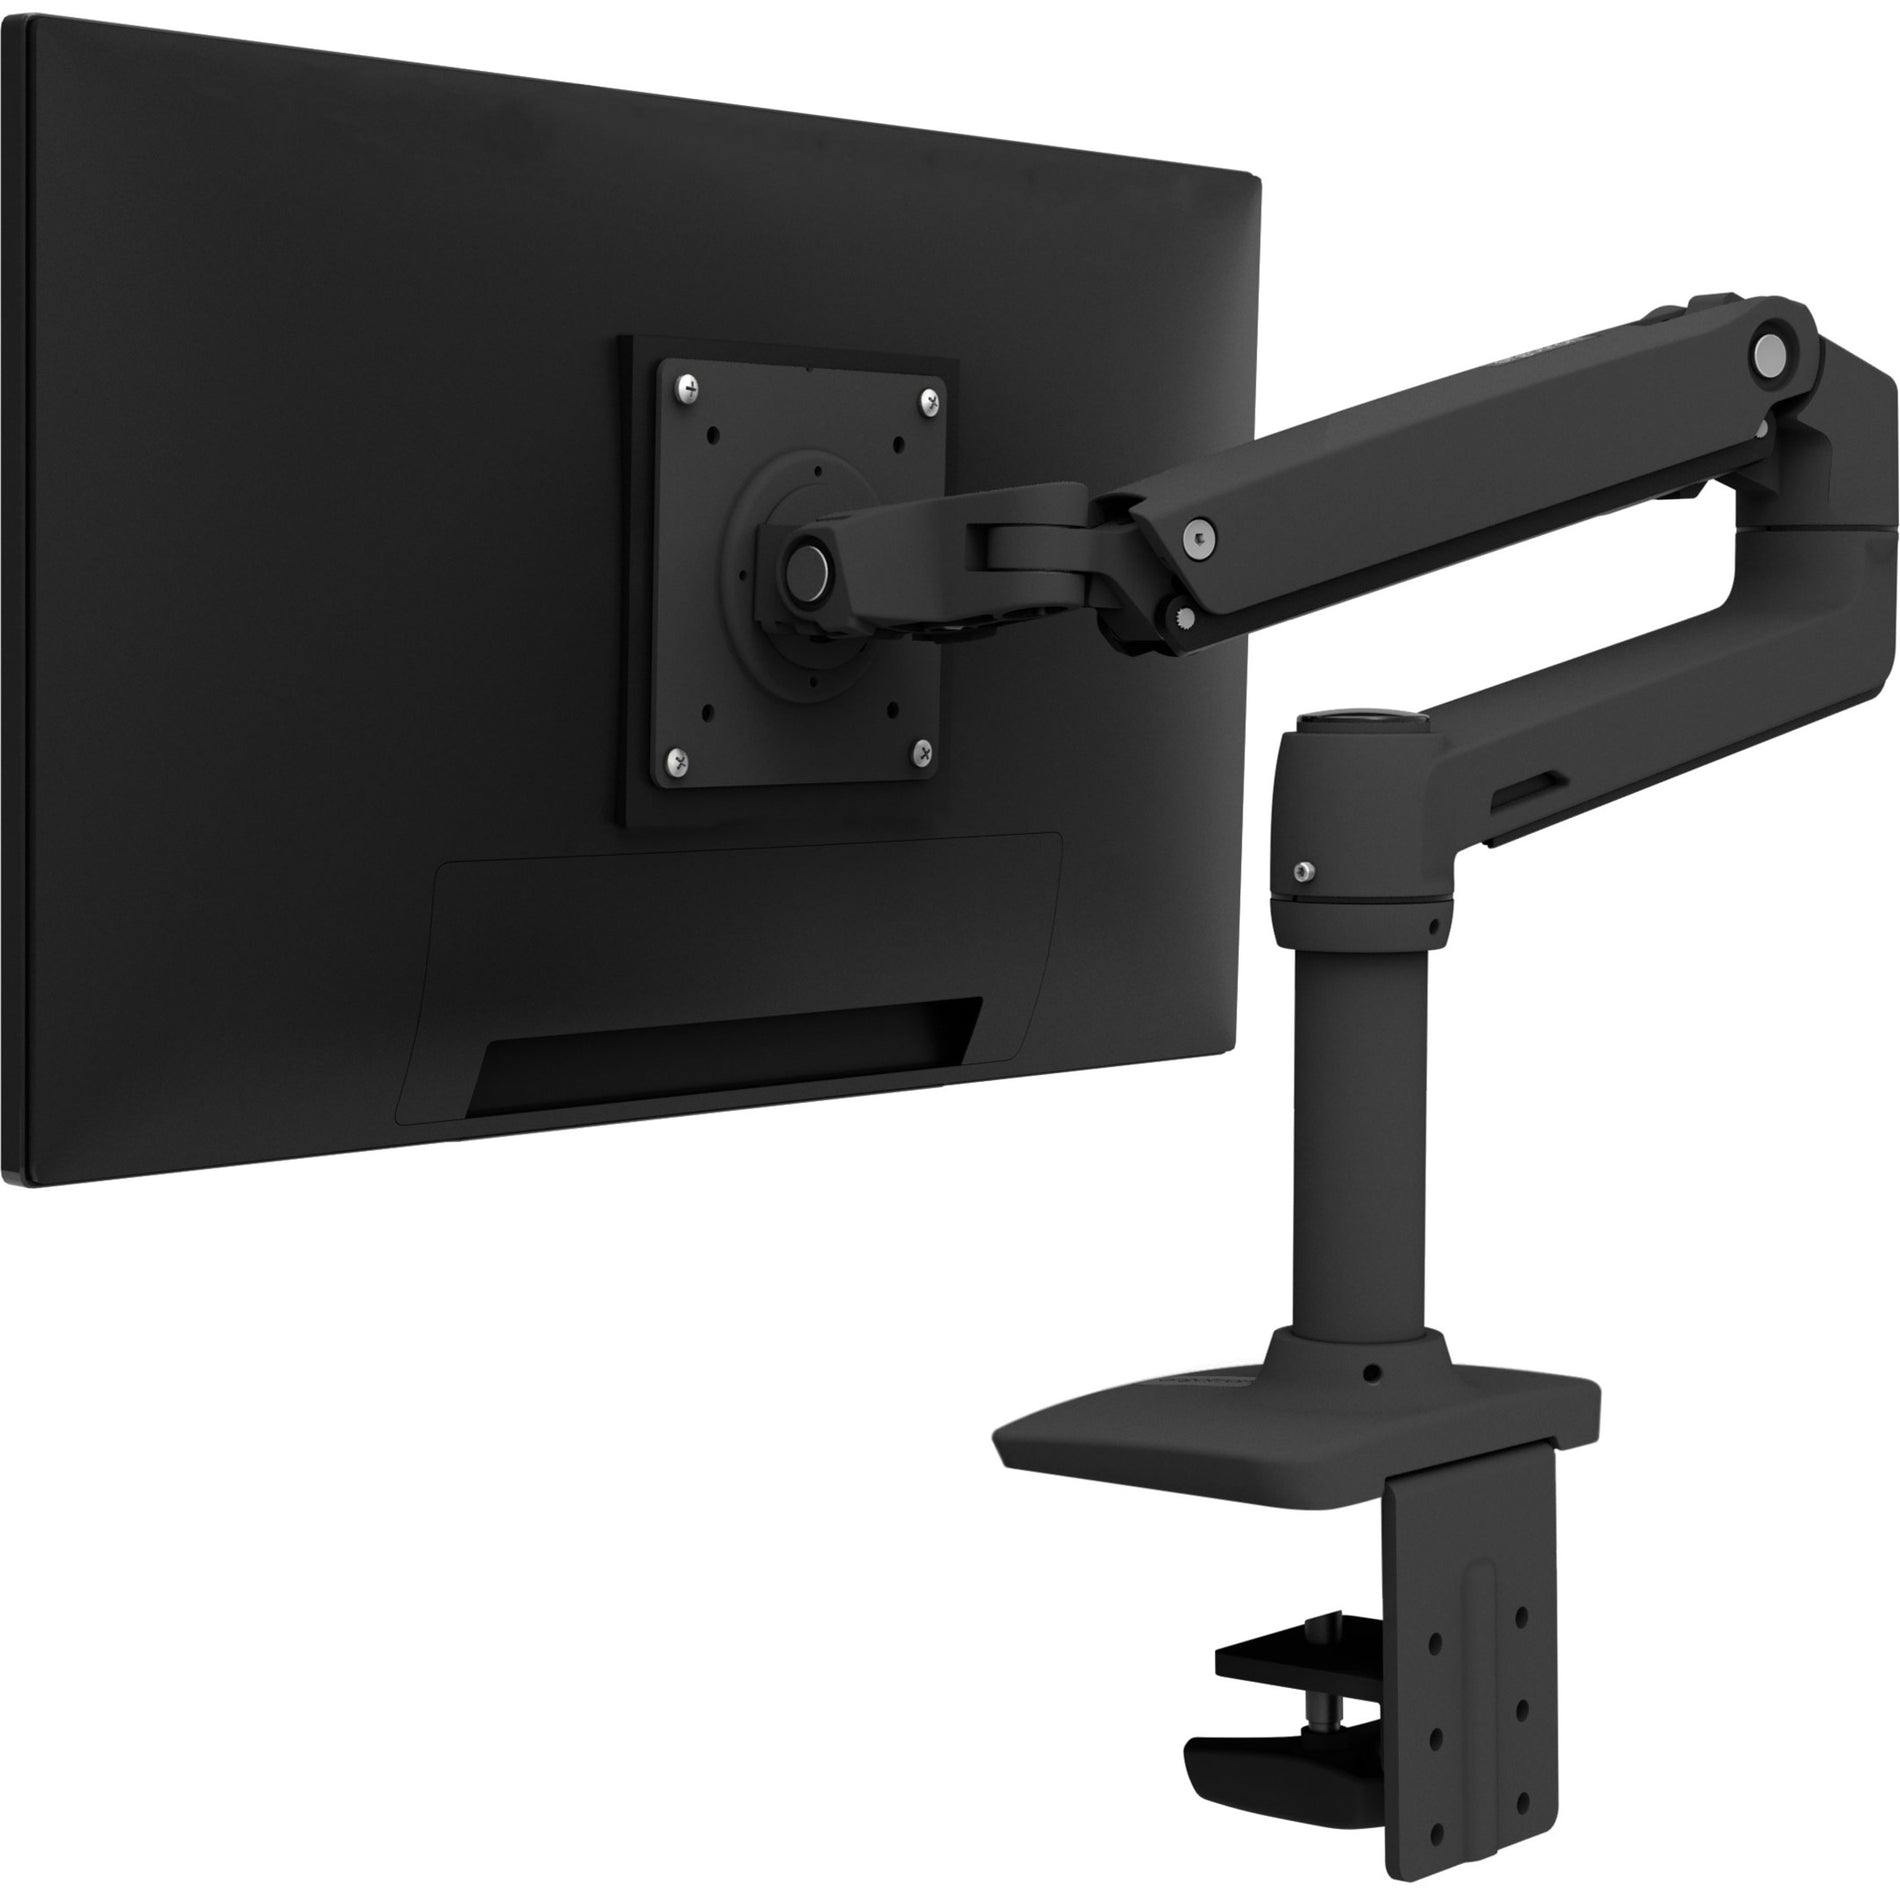 Ergotron 45-241-224 LX Desk Monitor Arm, Matte Black - Mounting Arm for Monitor